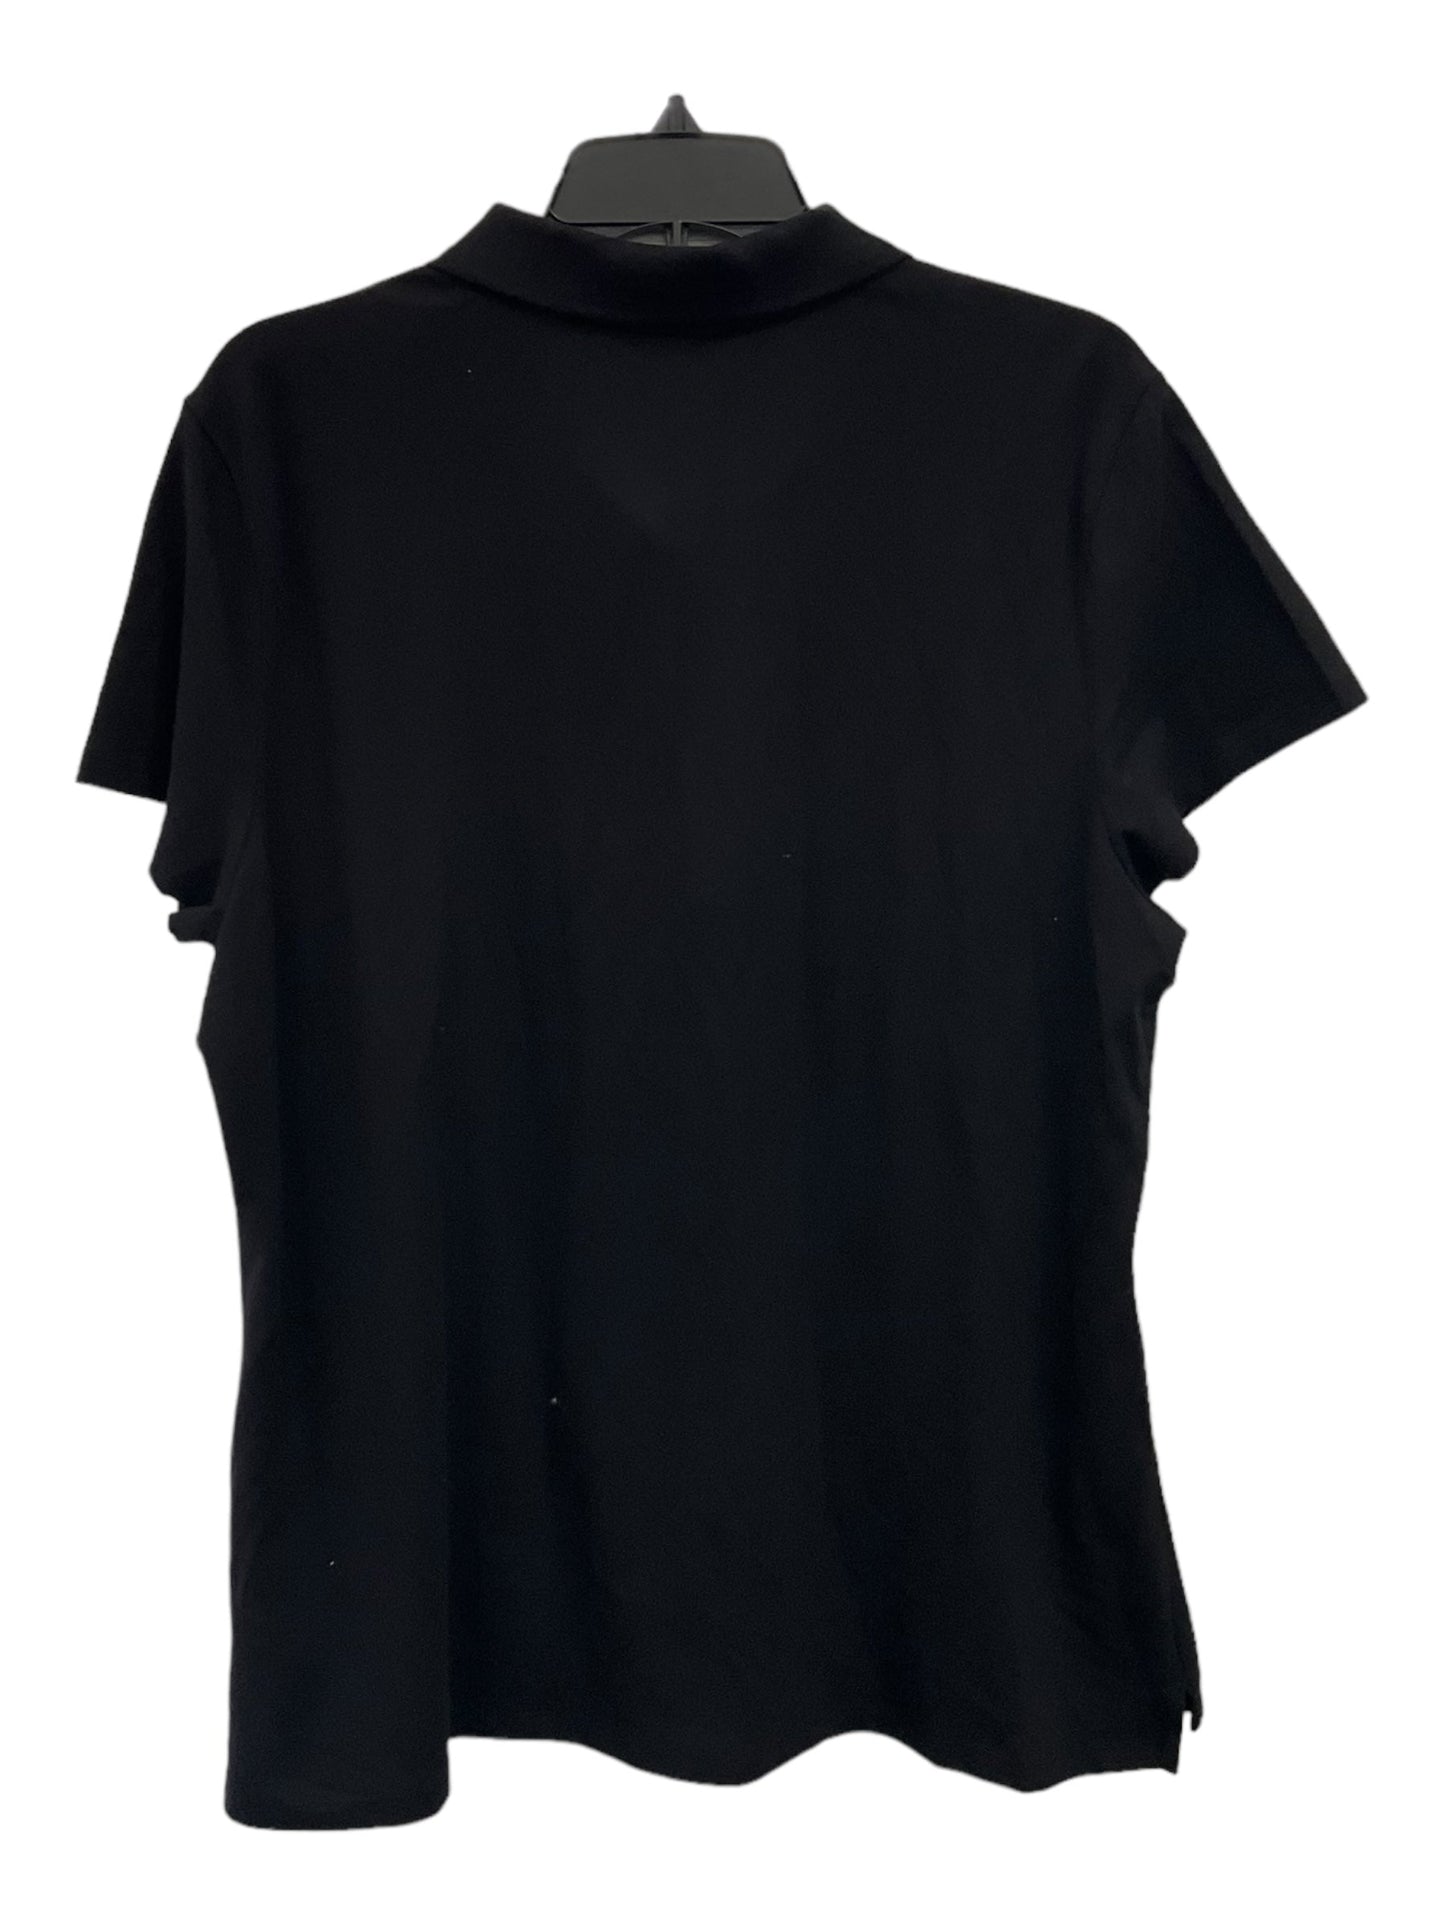 Black Top Short Sleeve Tommy Hilfiger, Size Xxl